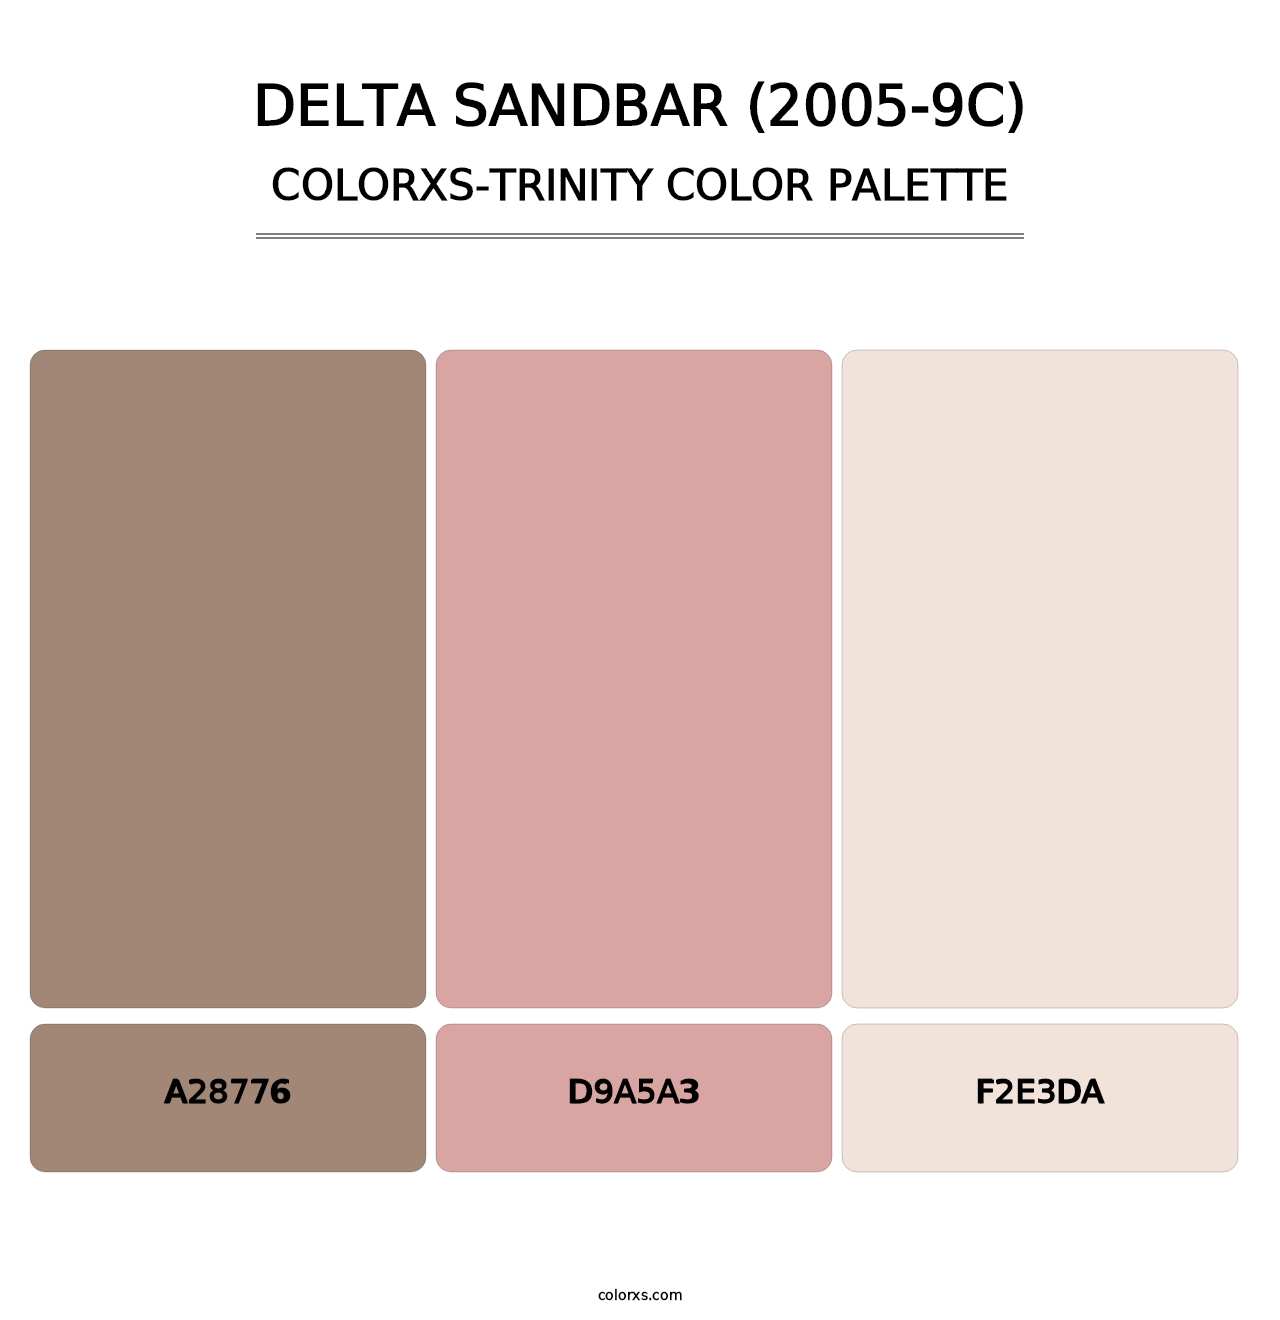 Delta Sandbar (2005-9C) - Colorxs Trinity Palette